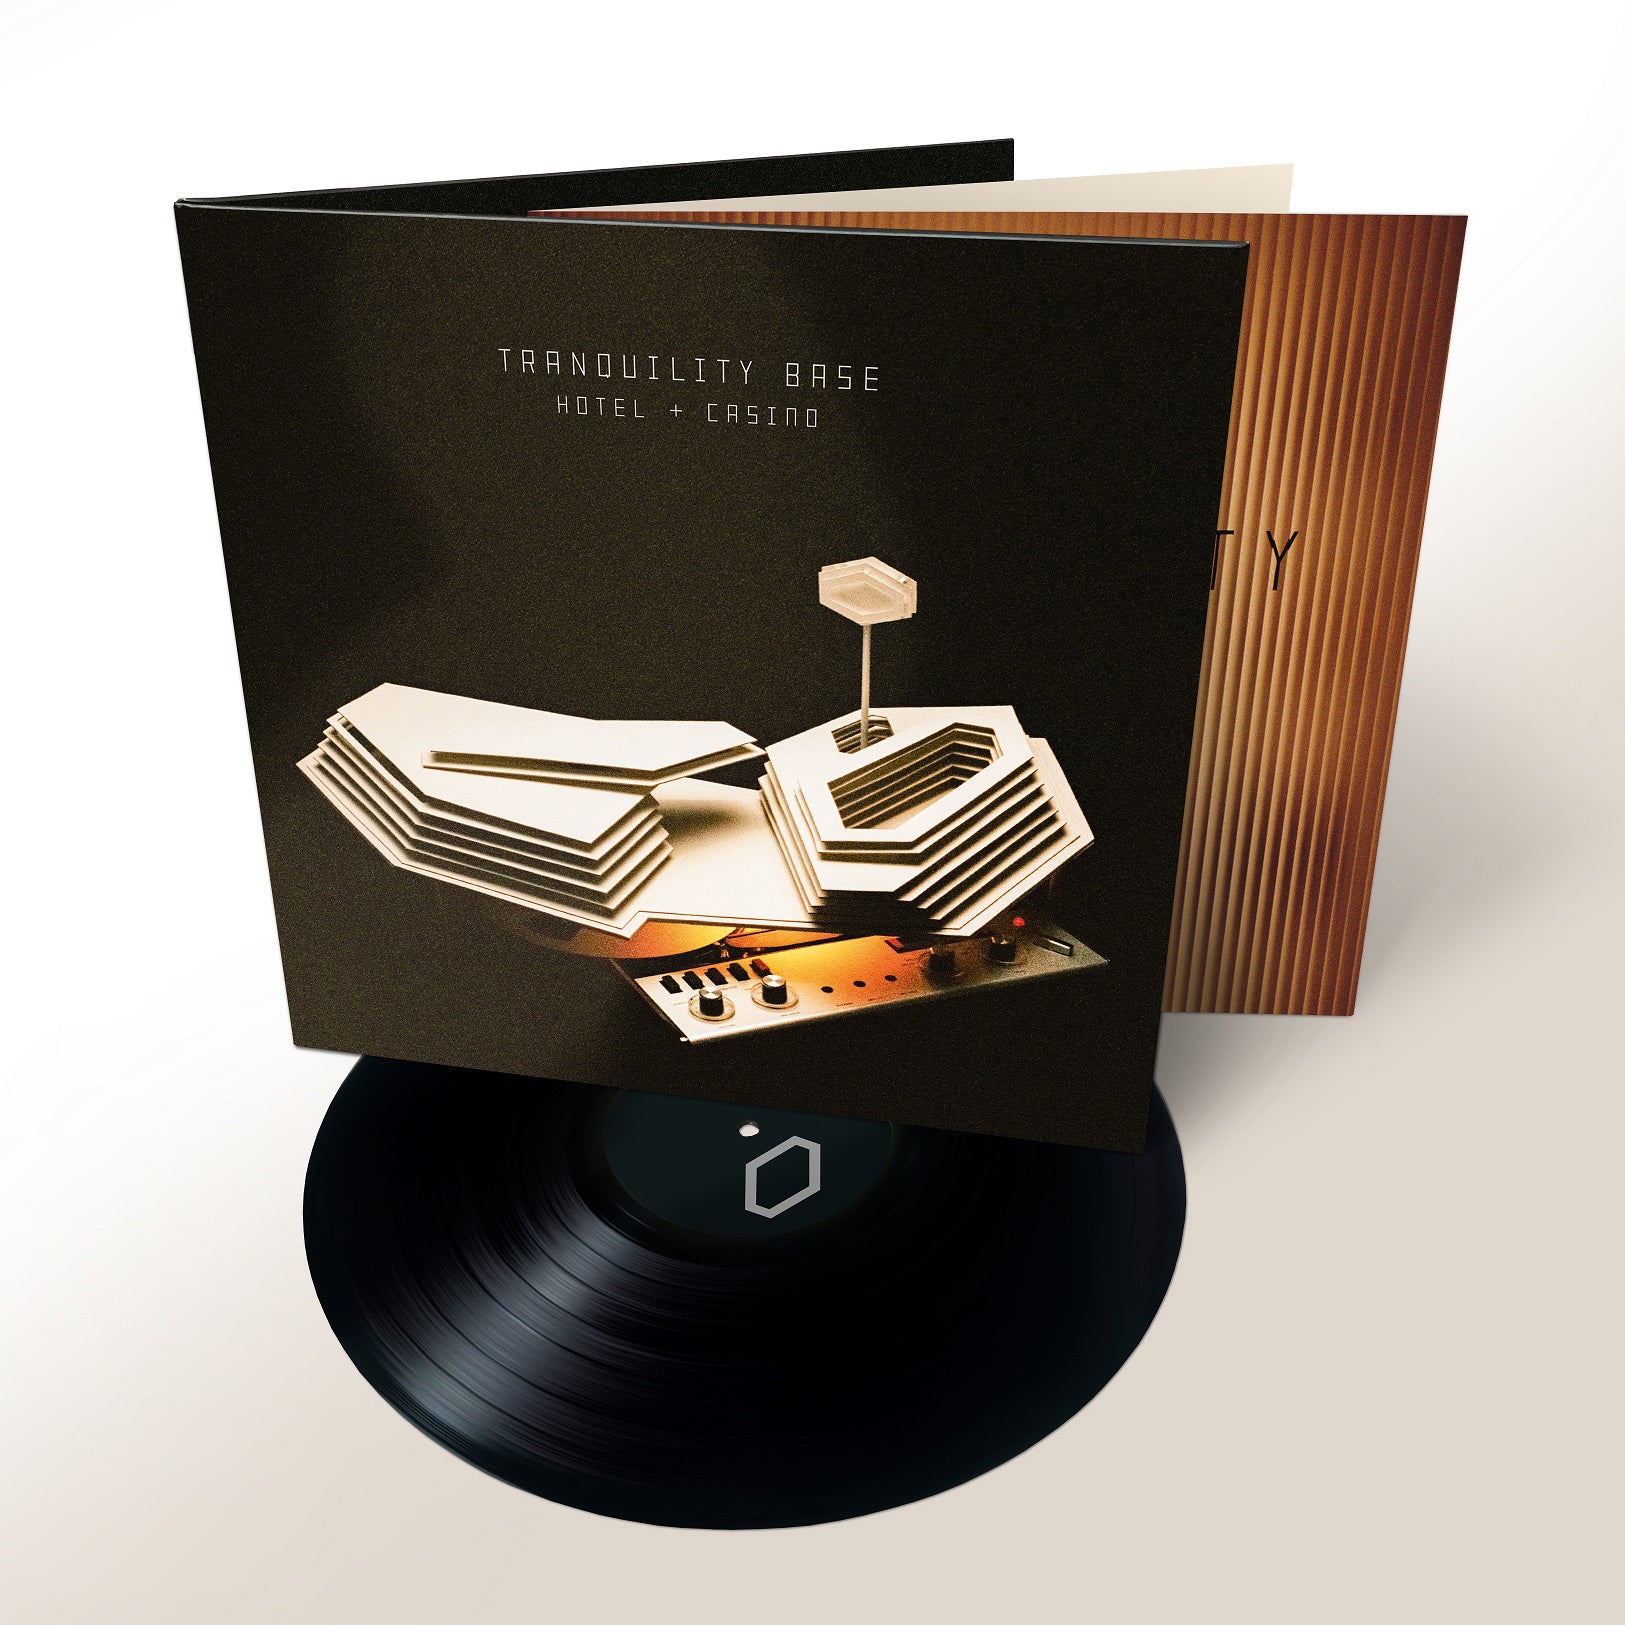 Tranquillity Base Hotel + Casino: Vinyl LP